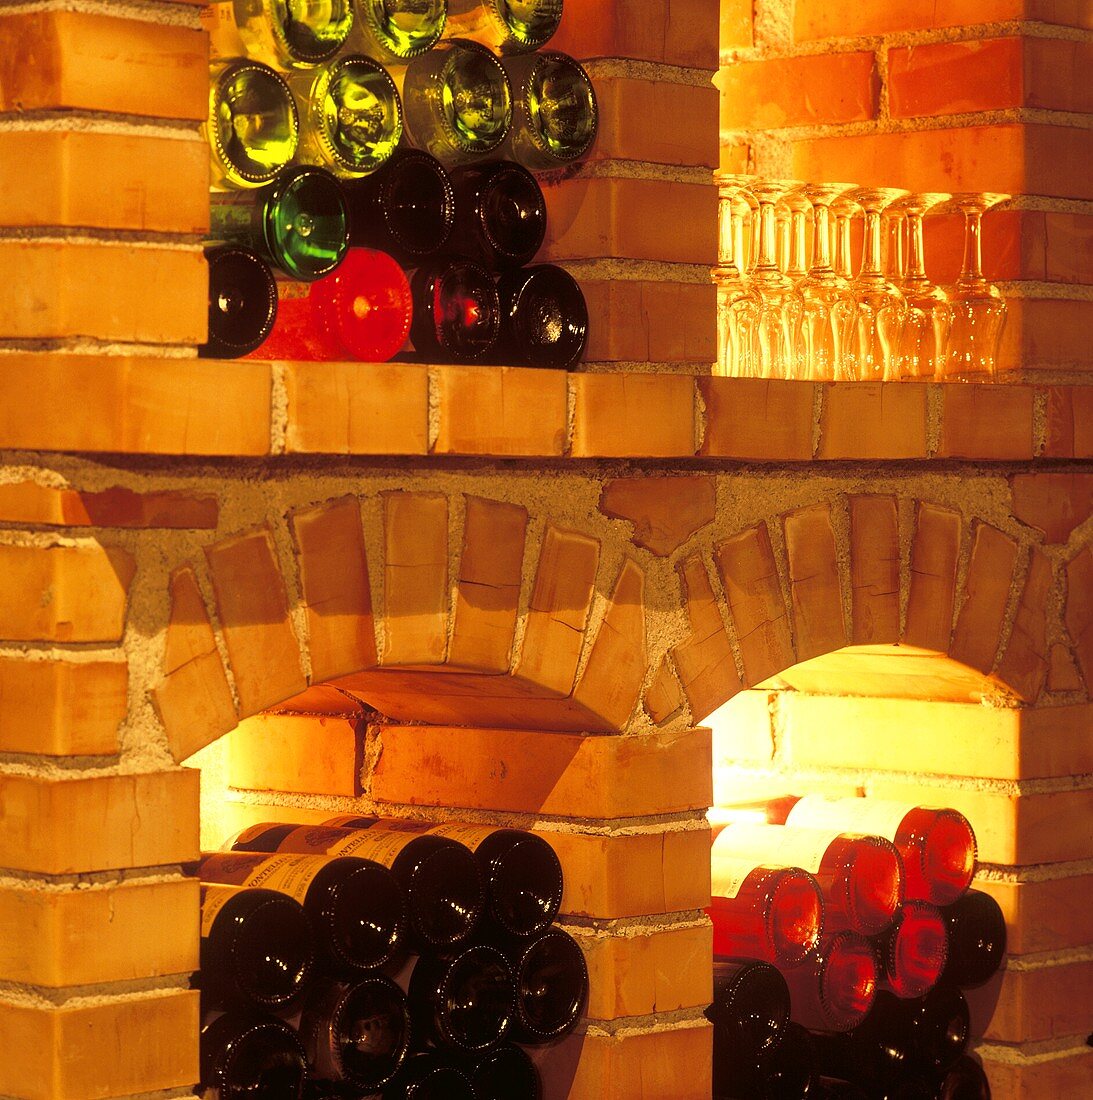 Wine bottles and wine glasses in wine rack